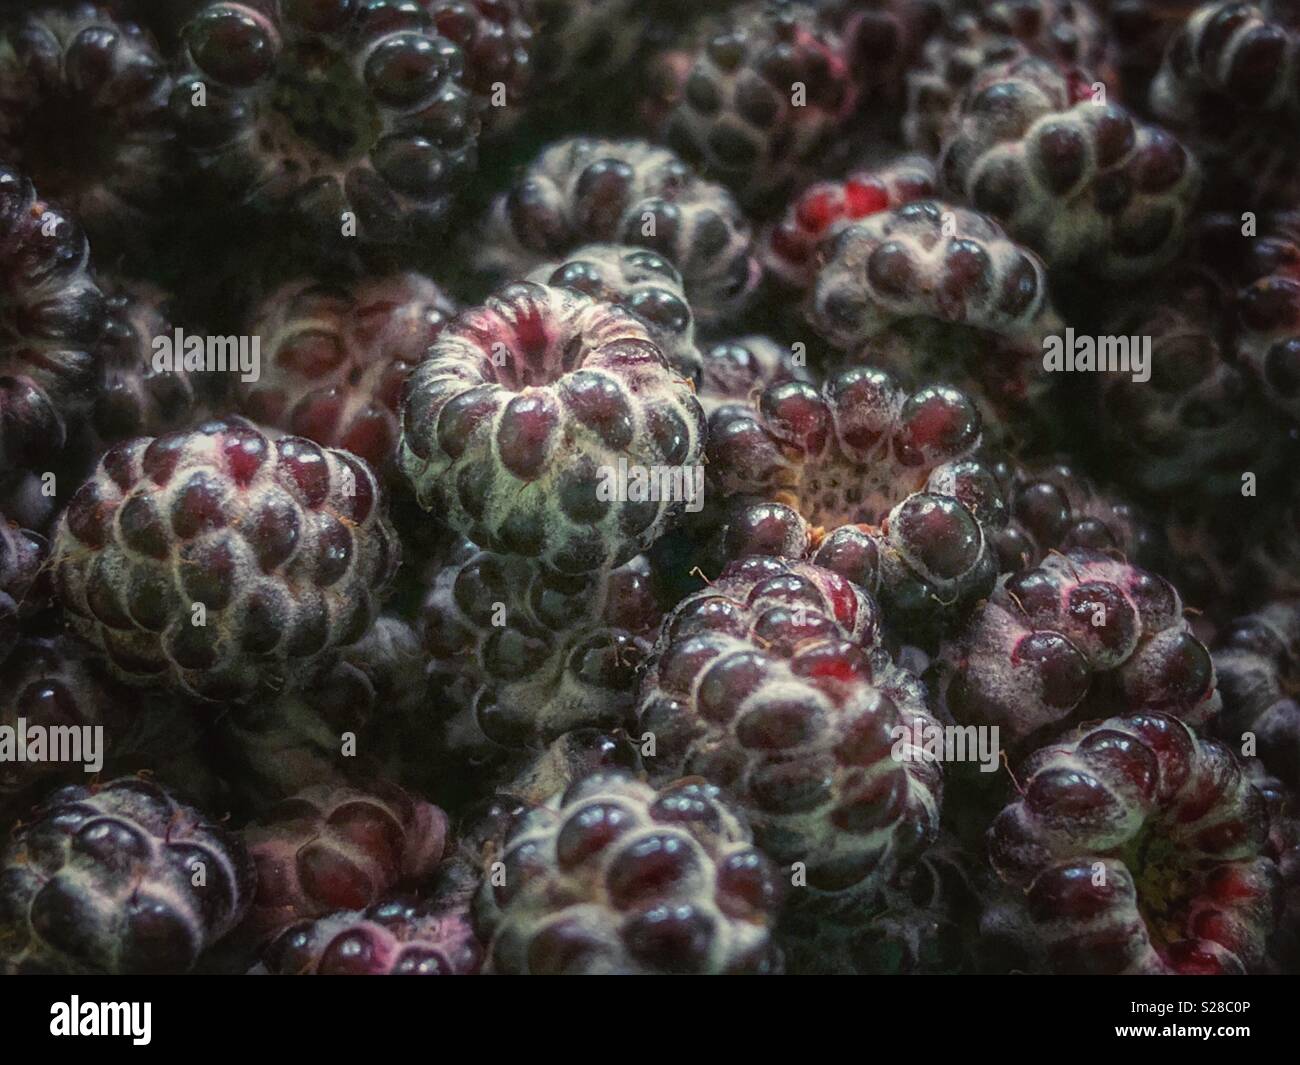 Closeup of fresh picked wild blackberries Stock Photo